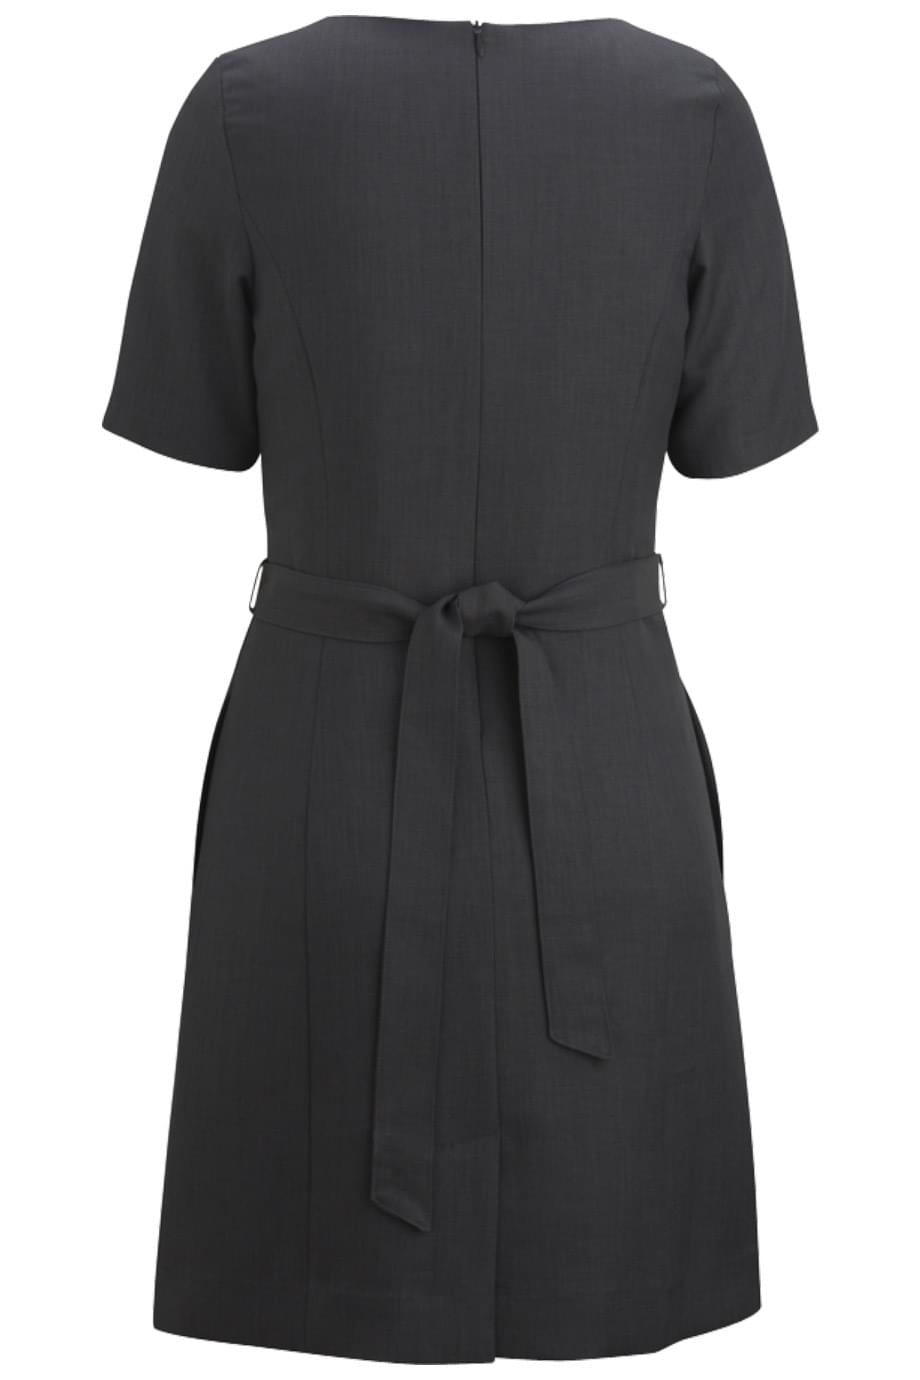 SYNERGY DRESS | Edwards Garment